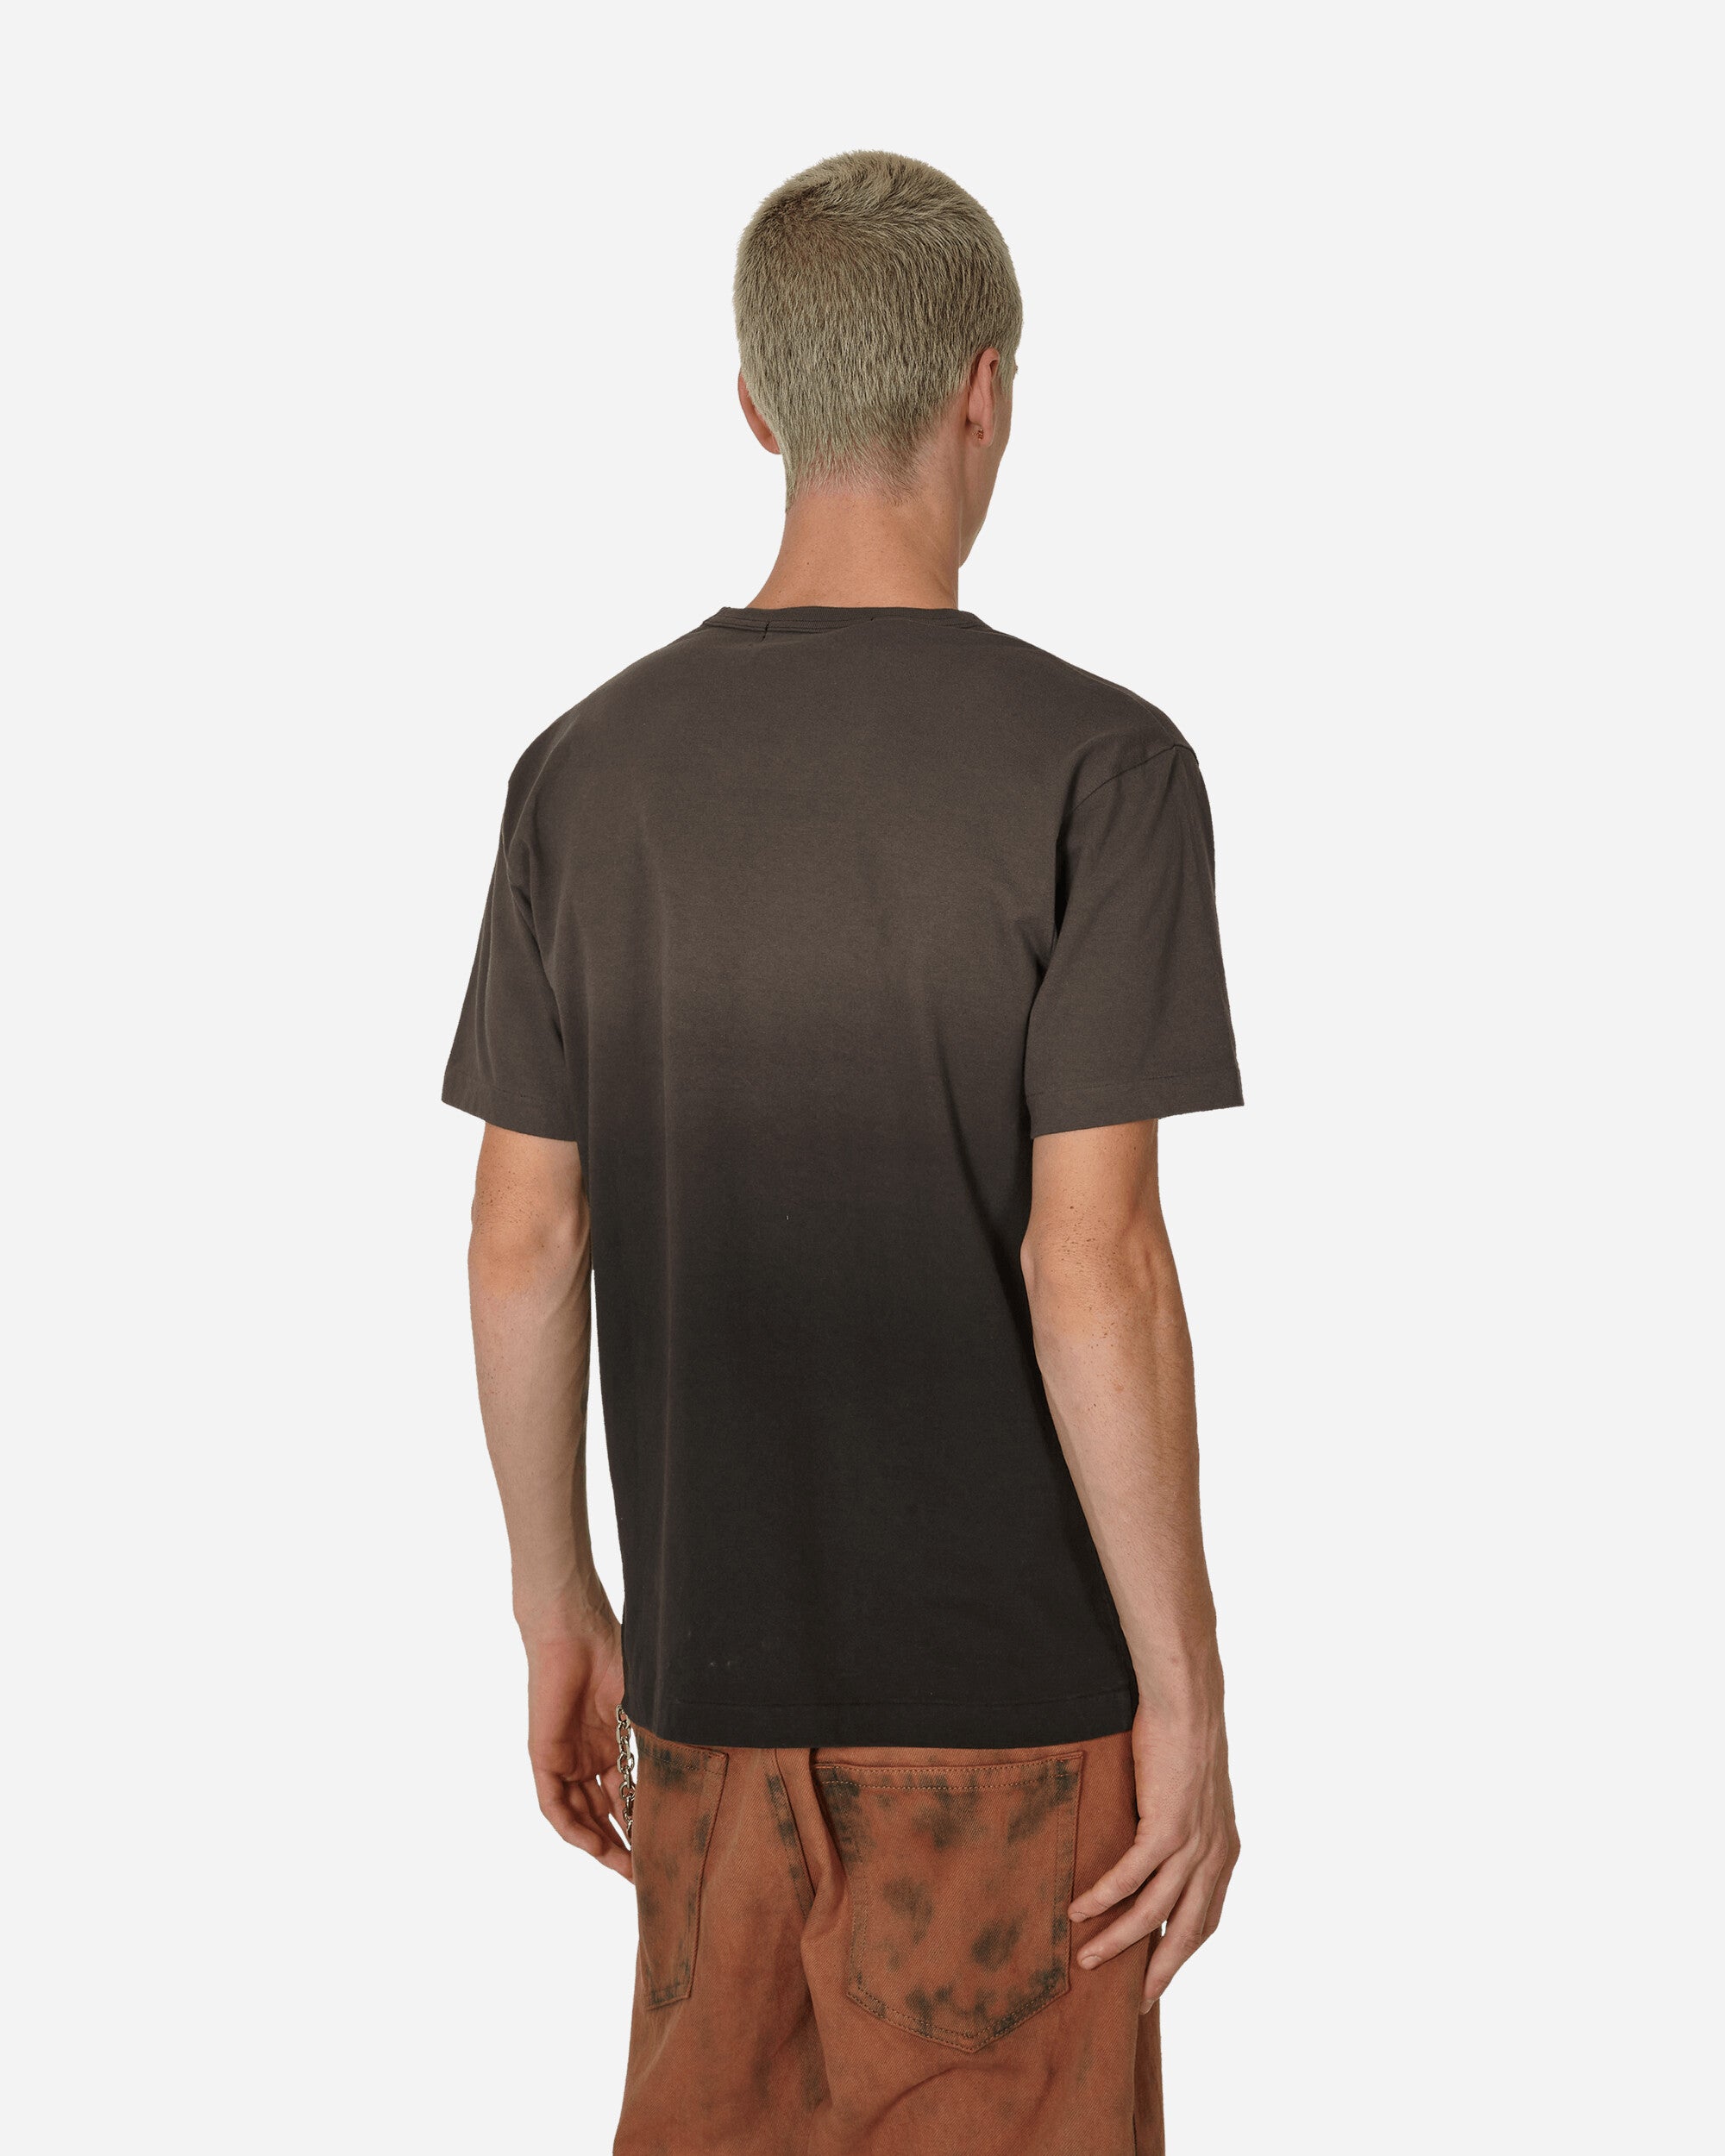 Comme Des Garçons Black T-Shirt Black T-Shirts Shortsleeve 1L-T502-W23 1